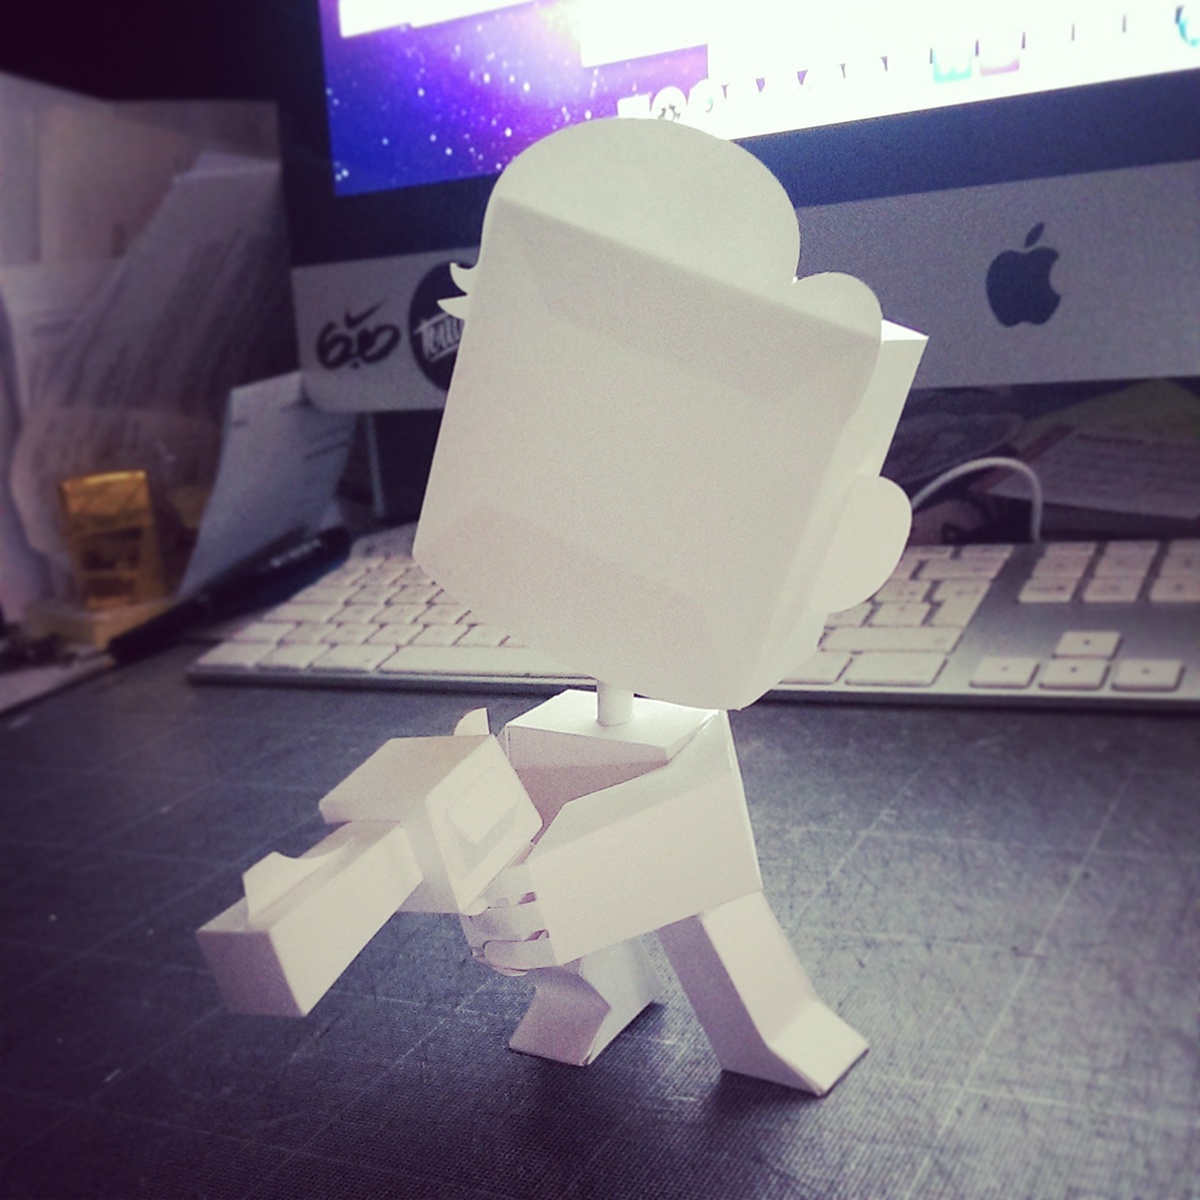 papertoy paper toy child TOUGUI city hunter nickylarson fold cut Glue Hero Retro geek